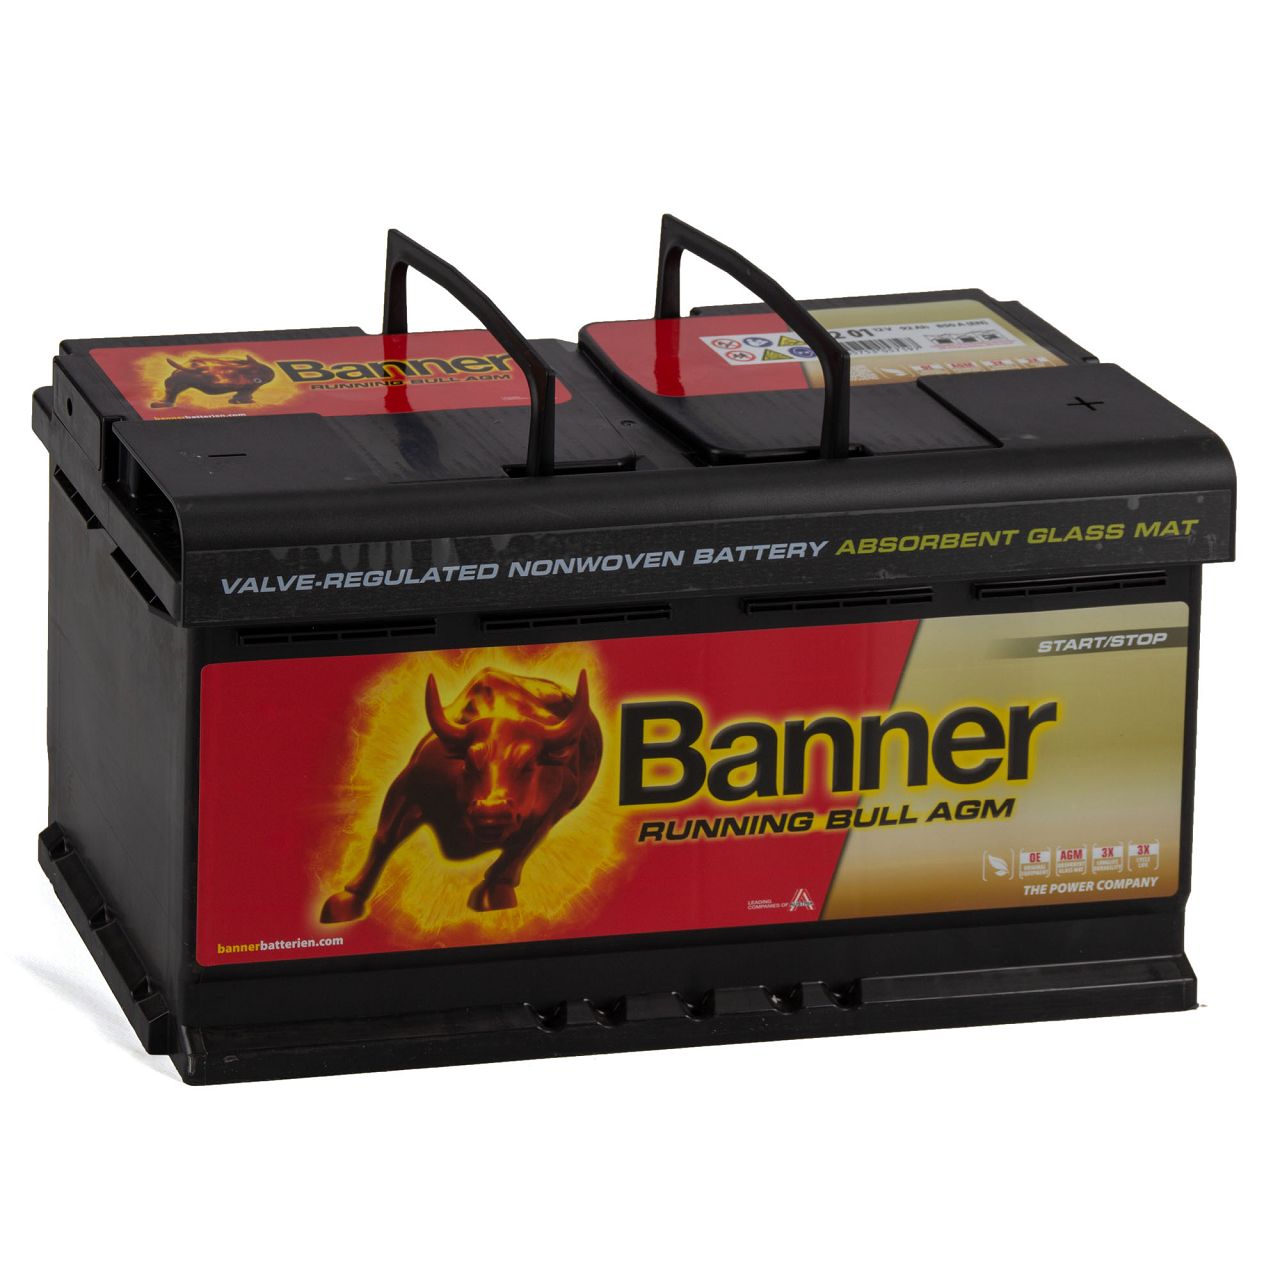 Banner P10040 Power Bull PROfessional Autobatterie 100Ah